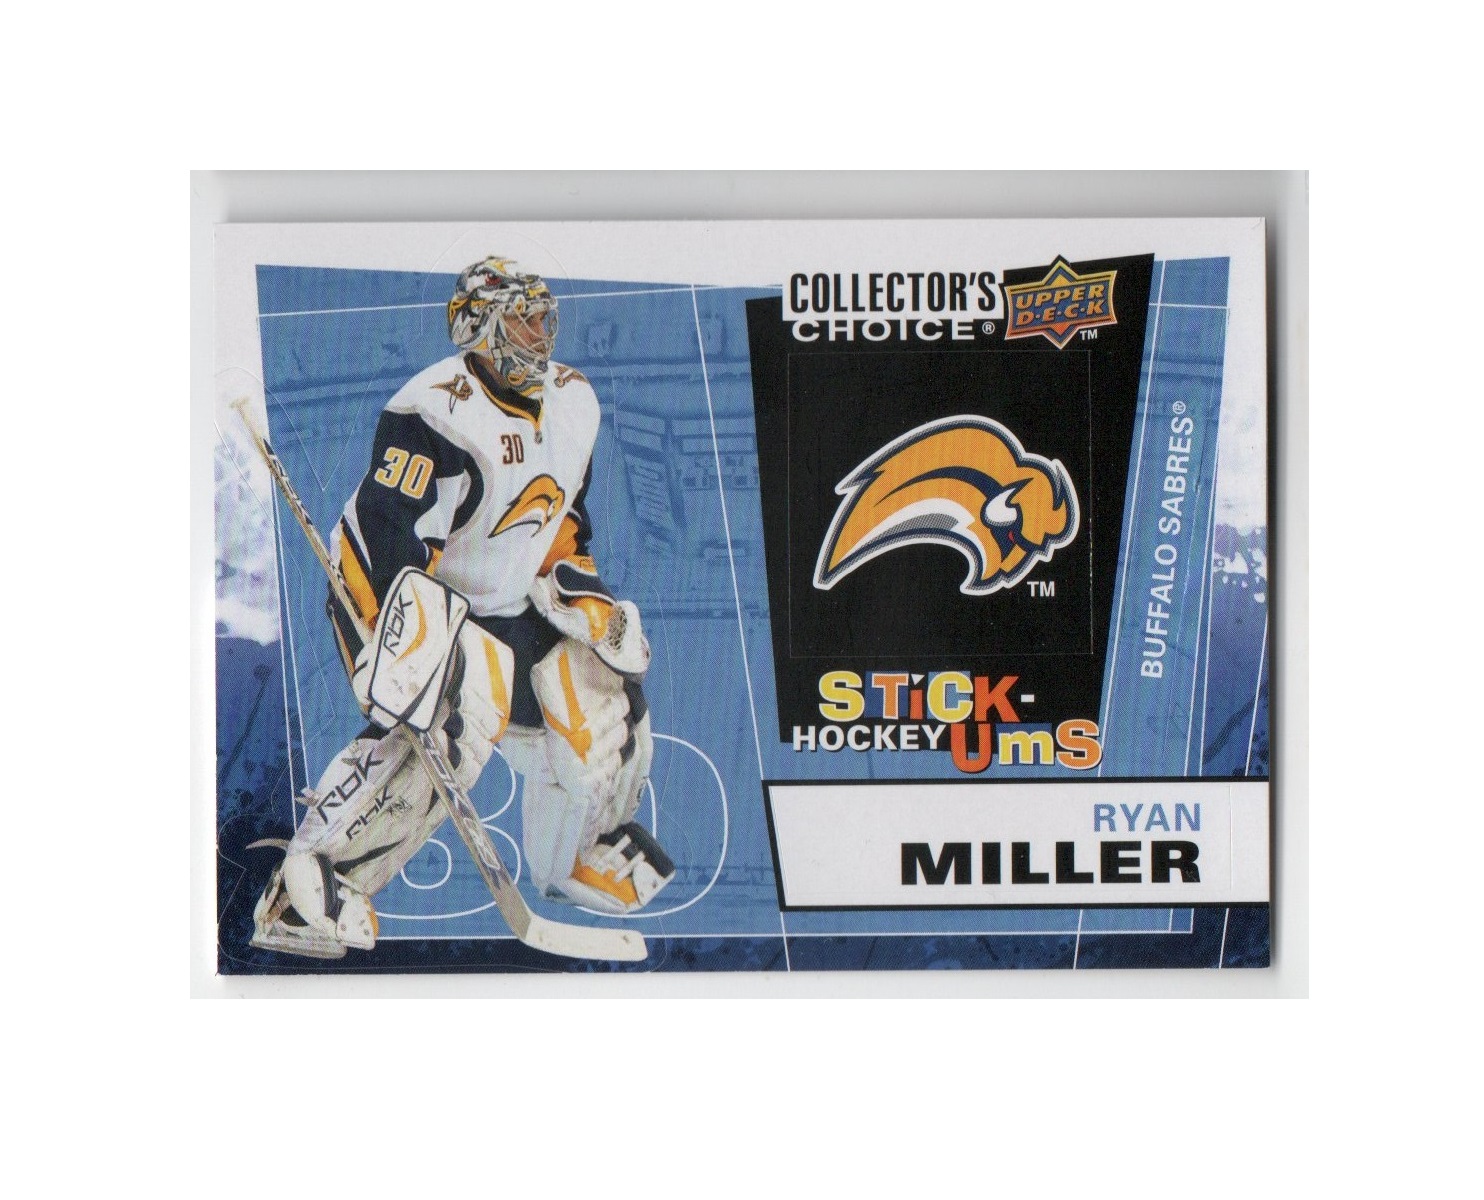 2008-09 Collector's Choice Stick-Ums #UMS28 Ryan Miller (10-X223-SABRES)